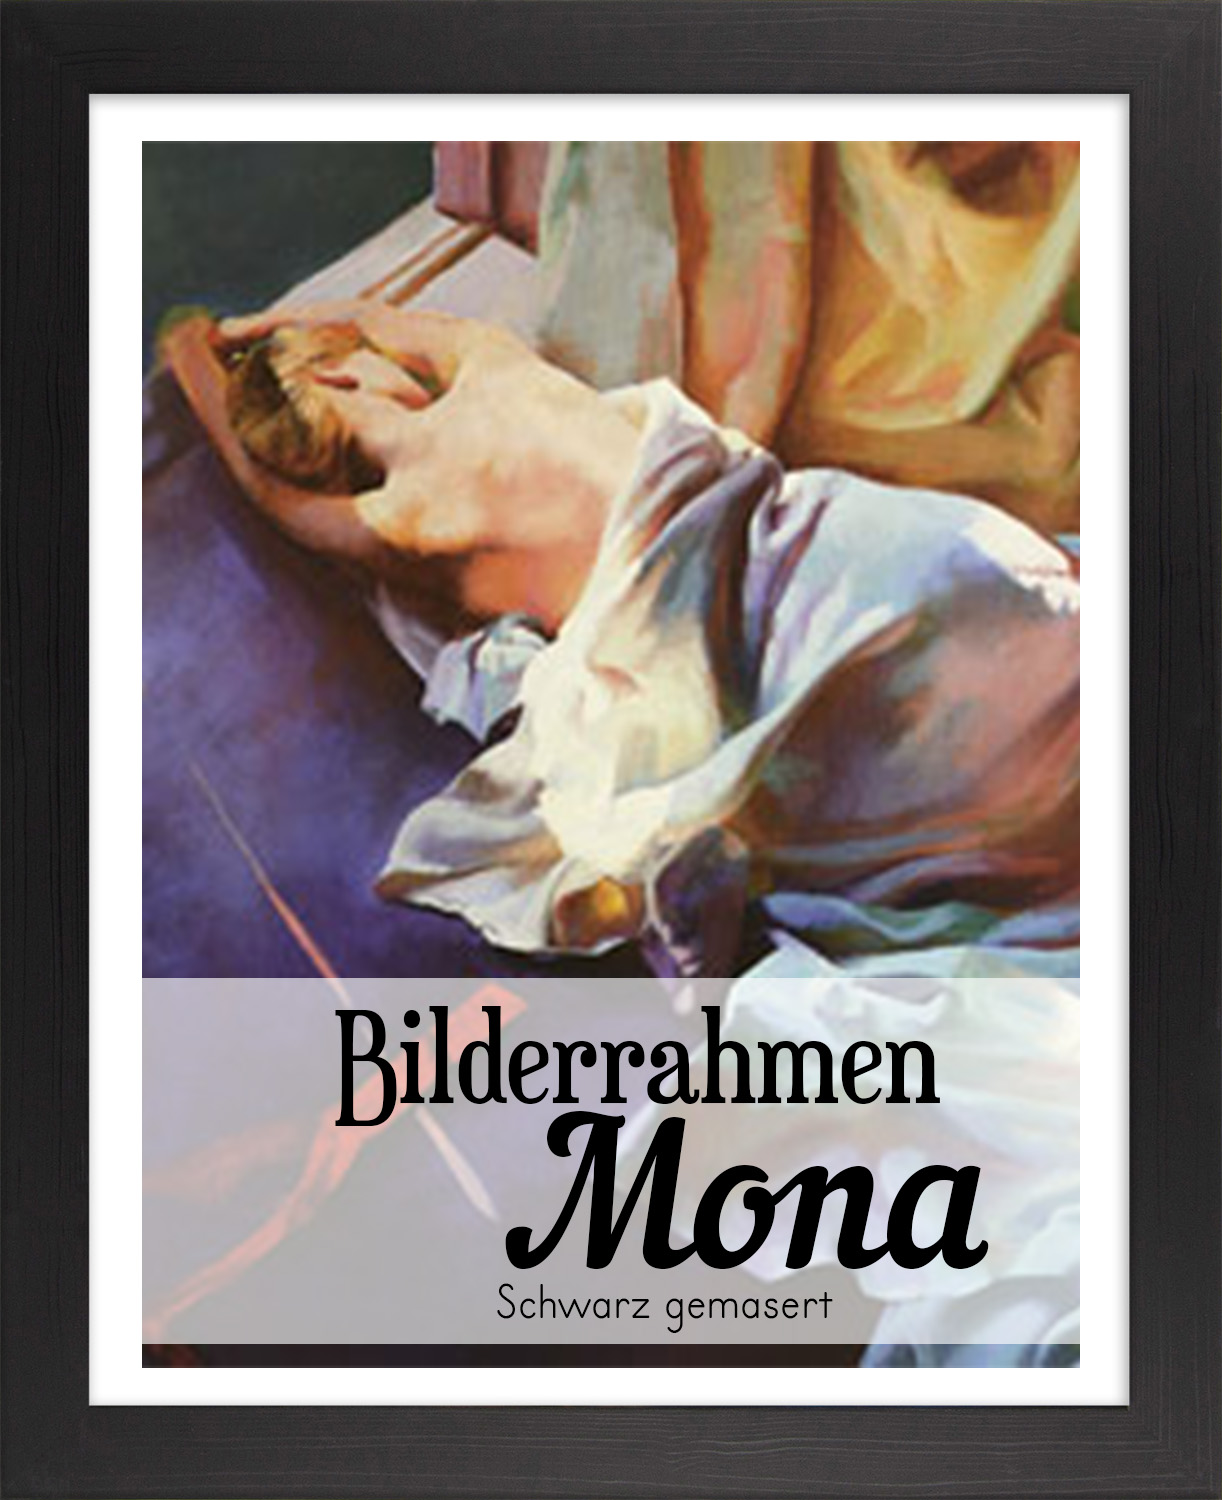 Mona 23 x 32,5 cm Bilderrahmen Homedeco 24 Holzwerkstoff Wahl Farbe Verglasung